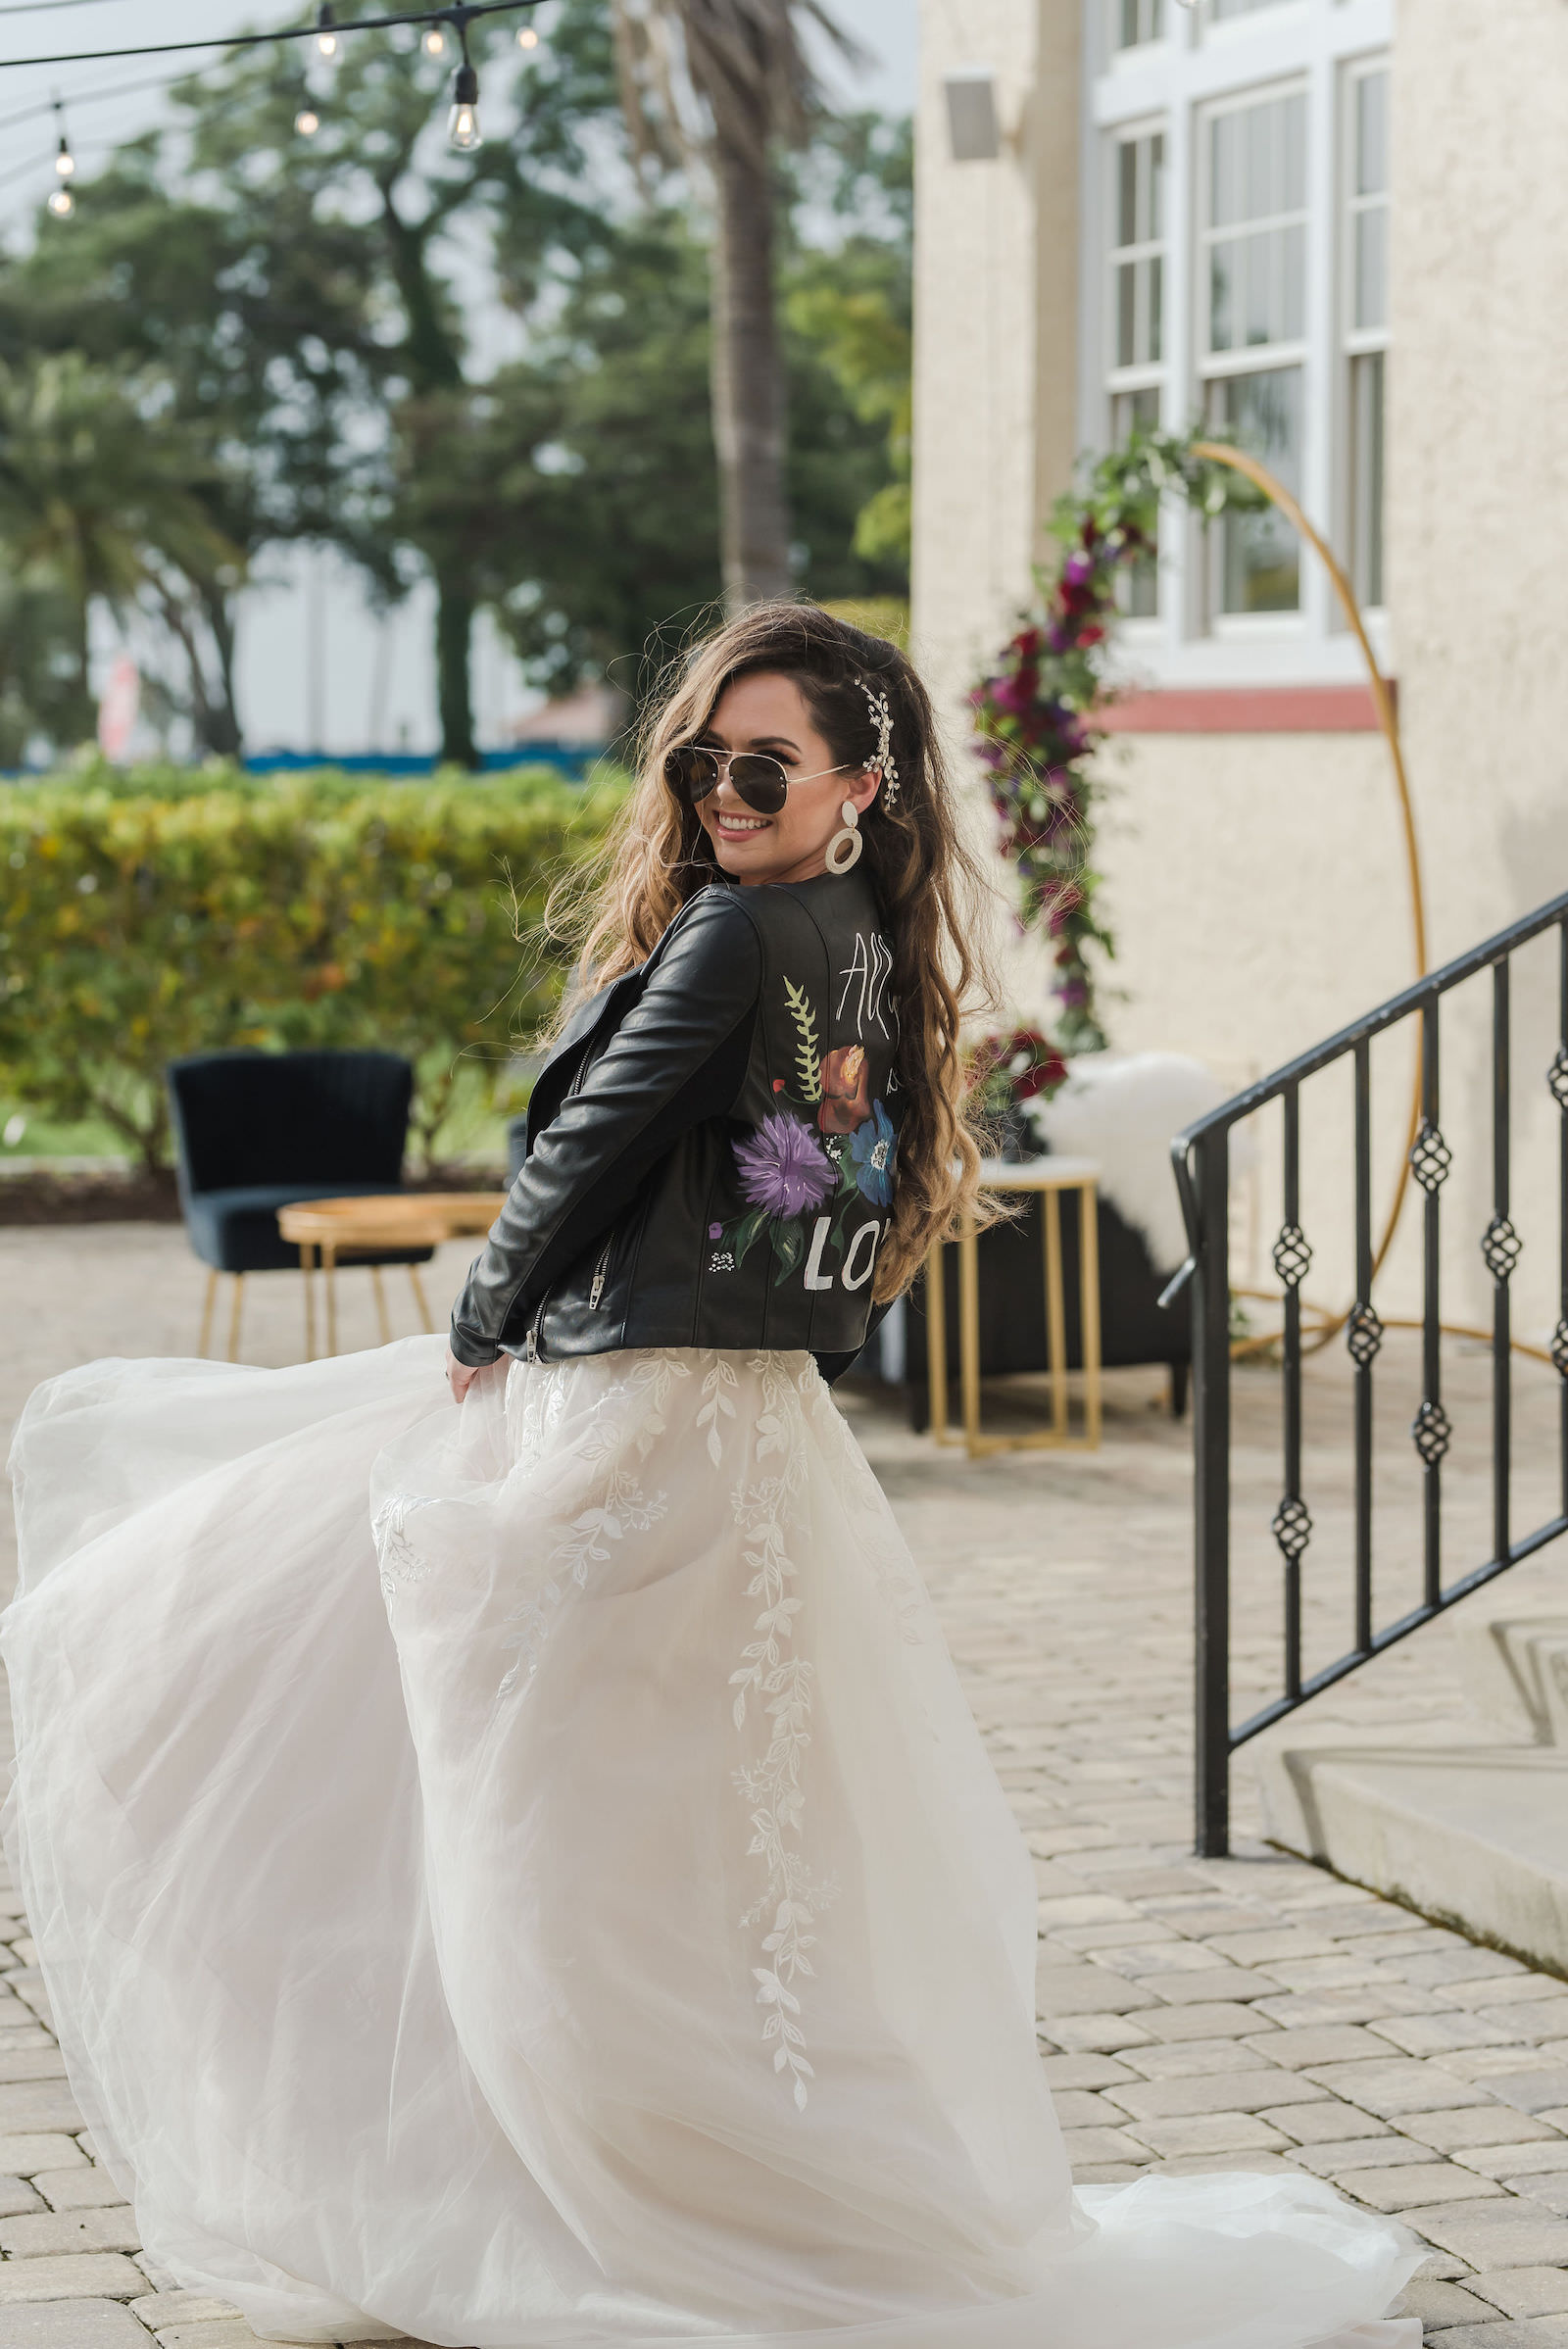 Modern Rock N Roll Bride Wearing Tulle Wedding Dress and Custom Black Leather Jacket and Sunglasses | Tampa Bay Wedding Photographer Amanda Zabrocki Photography